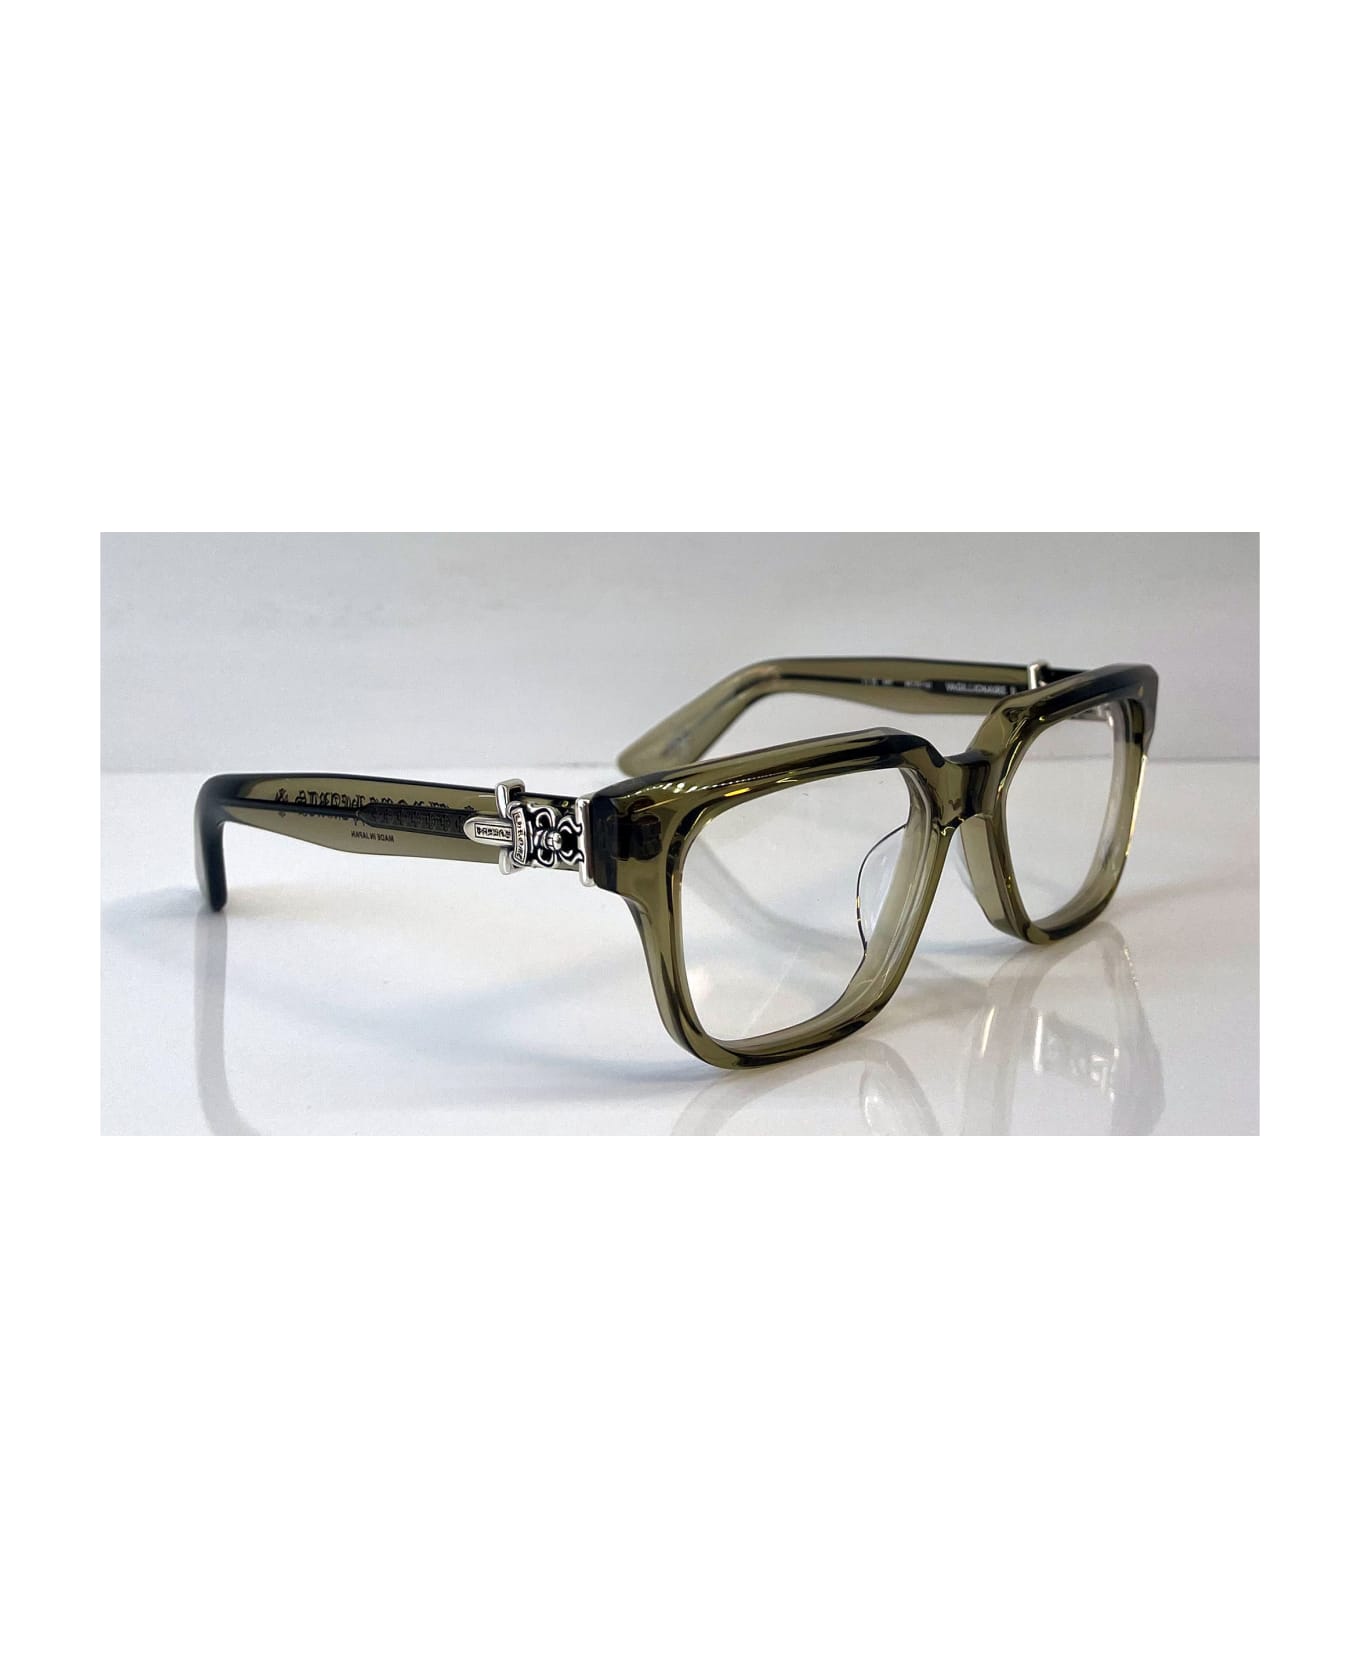 Chrome Hearts Vagillionaire Ii - Olive Rx Glasses - olive green